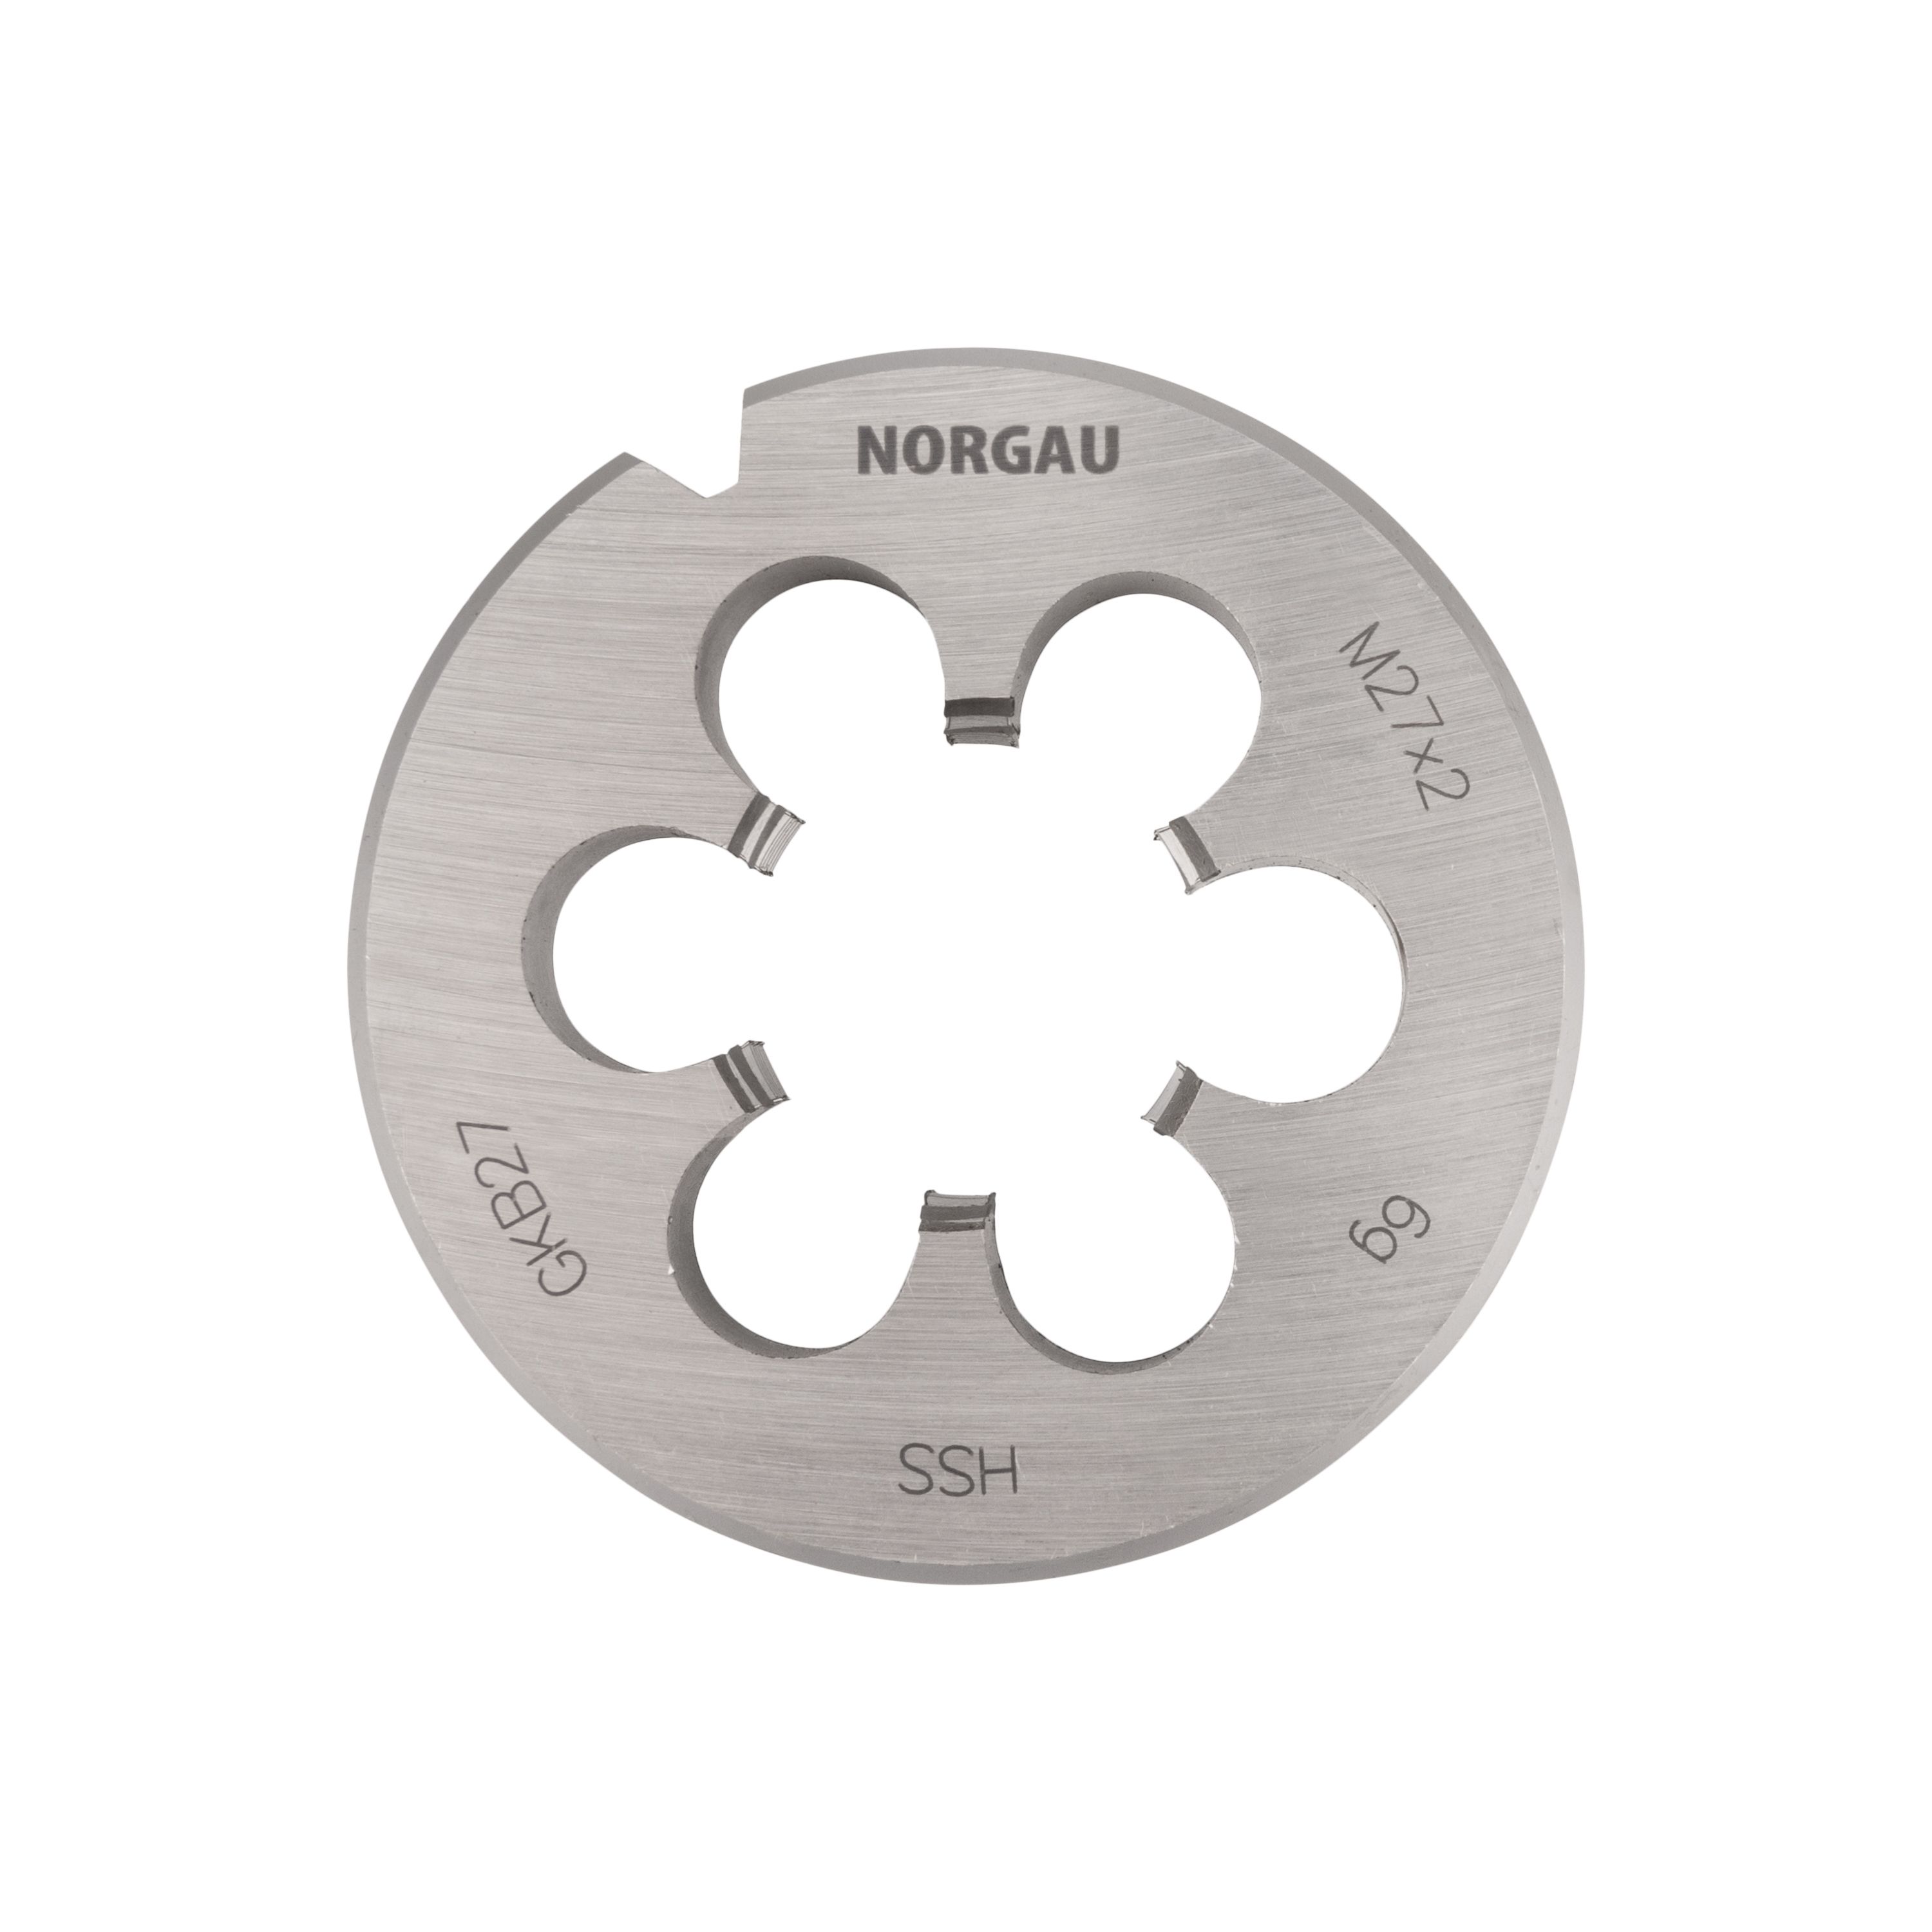 Плашка NORGAU Industrial MF27x2х65 мм. метрическая, угол 60, по DIN223, HSS плашка norgau industrial mf27x2х65 мм метрическая угол 60 по din223 hss